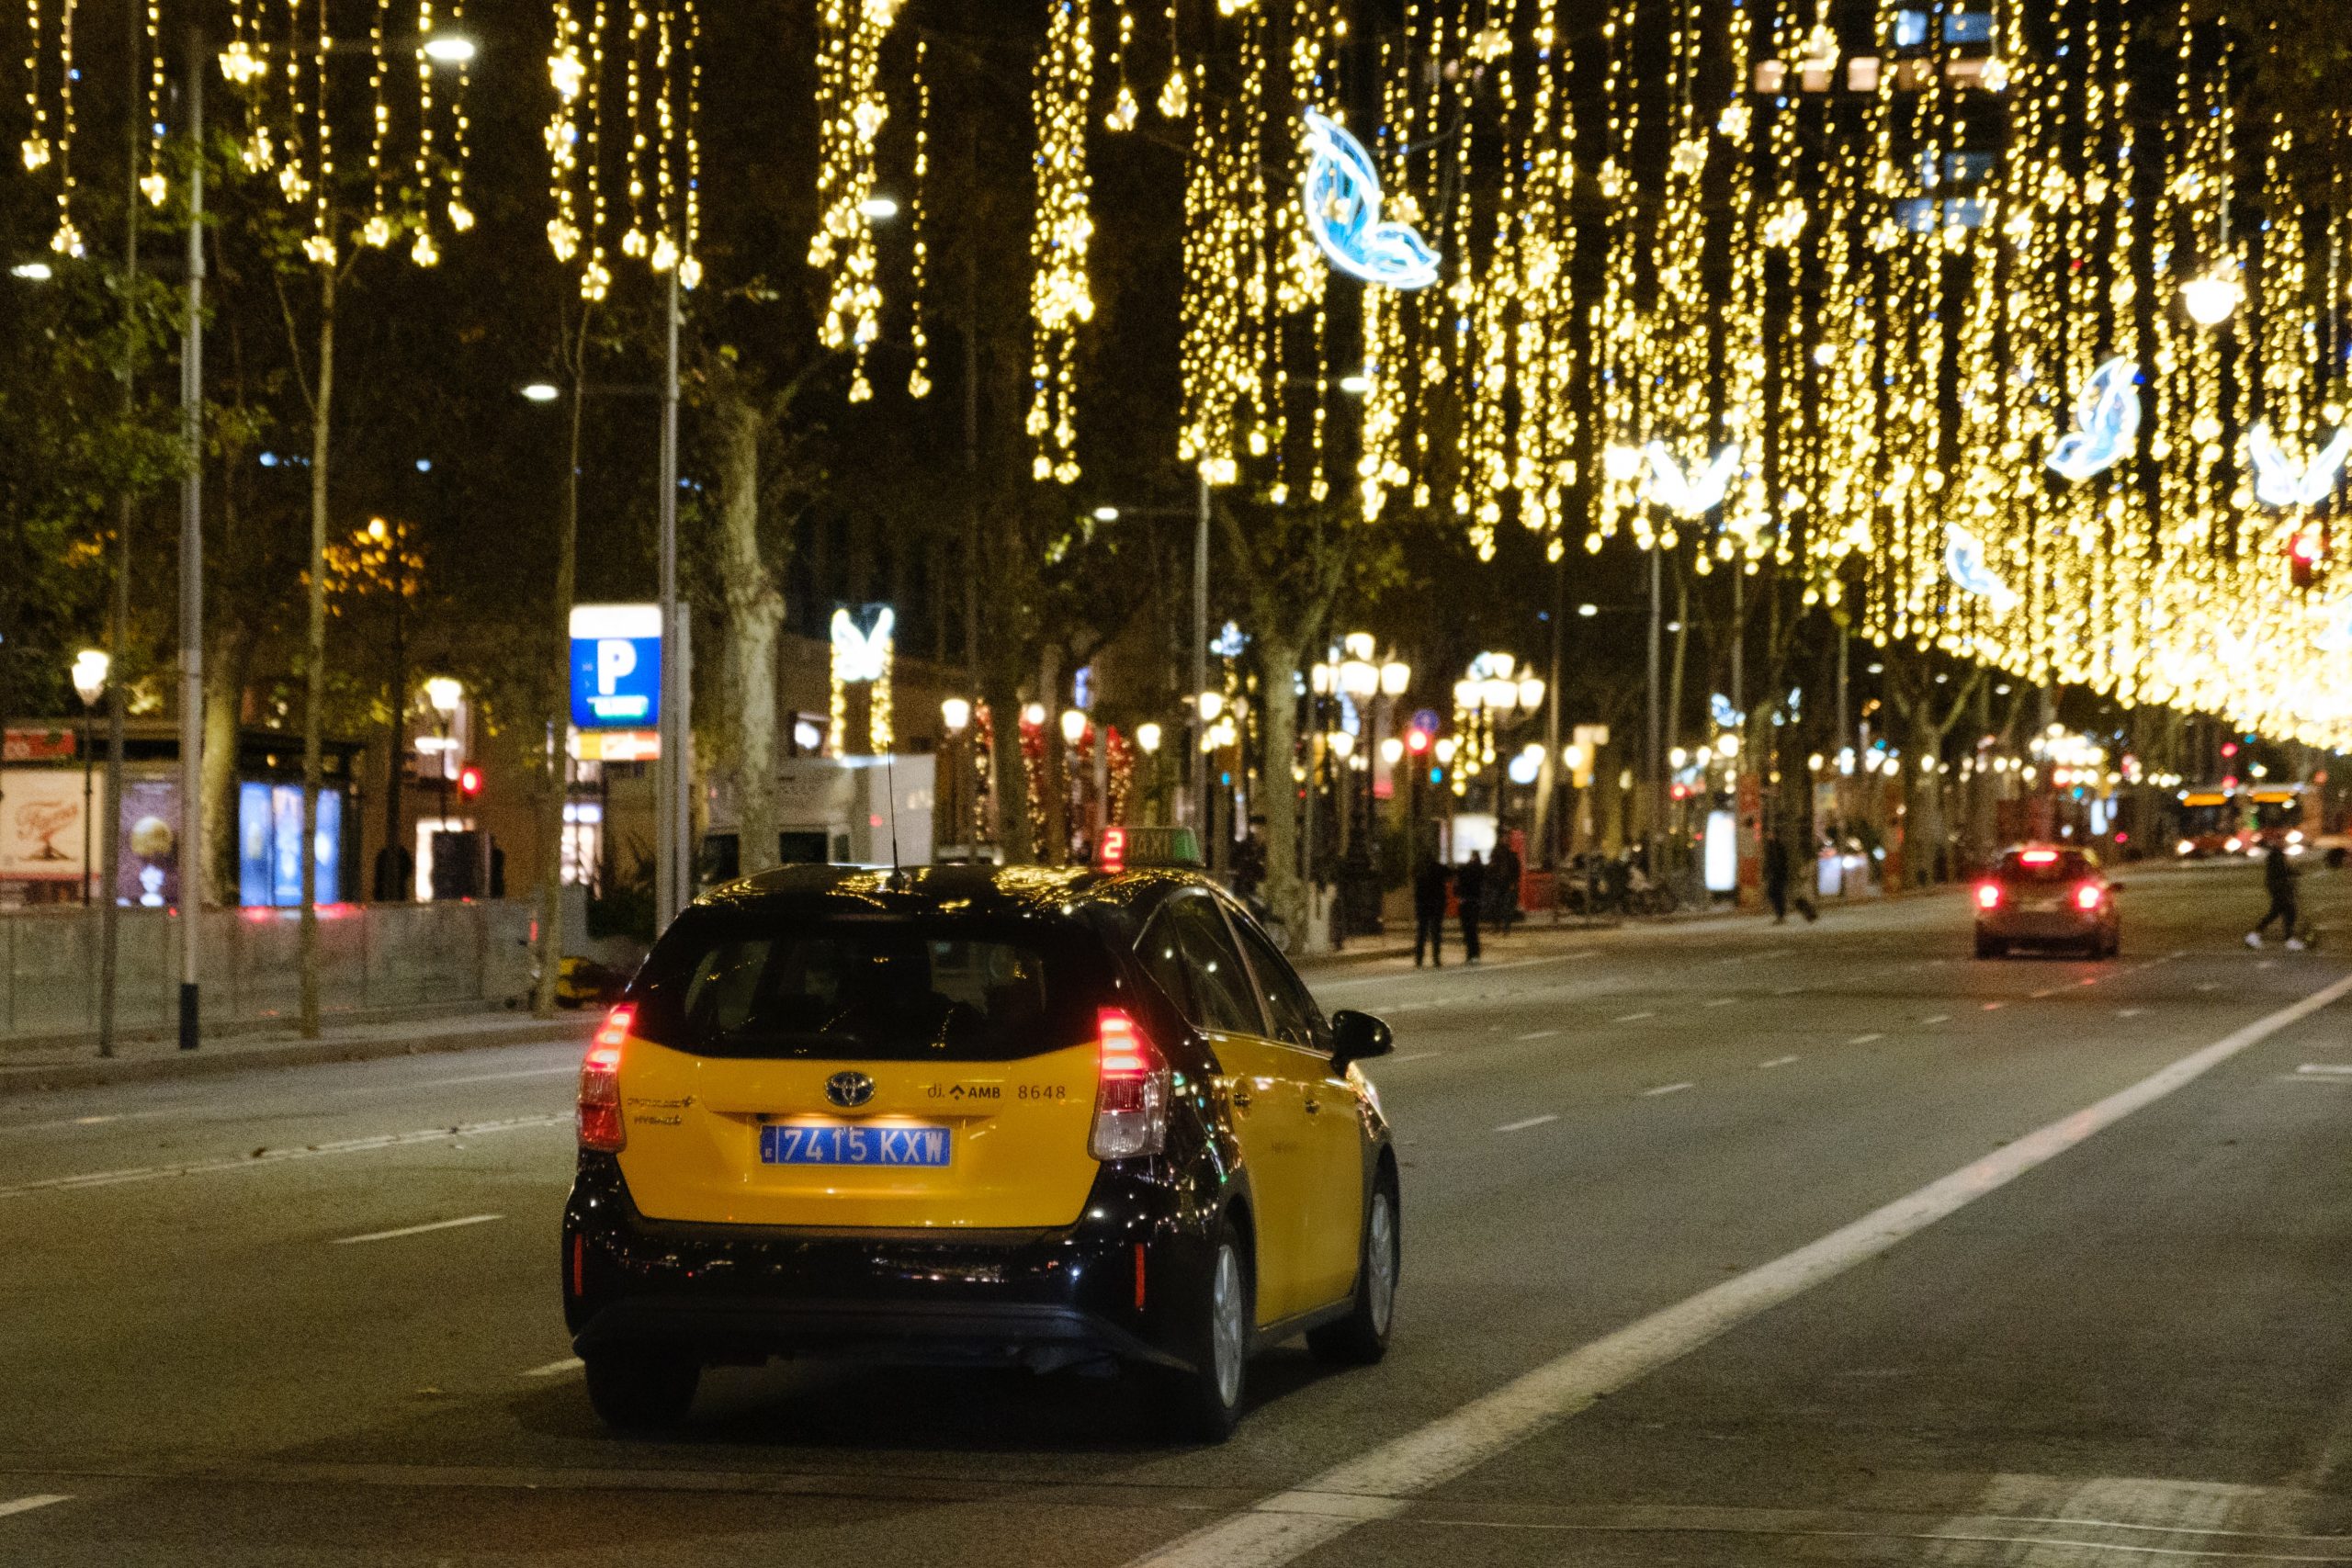 barcelona in December Christmas lights